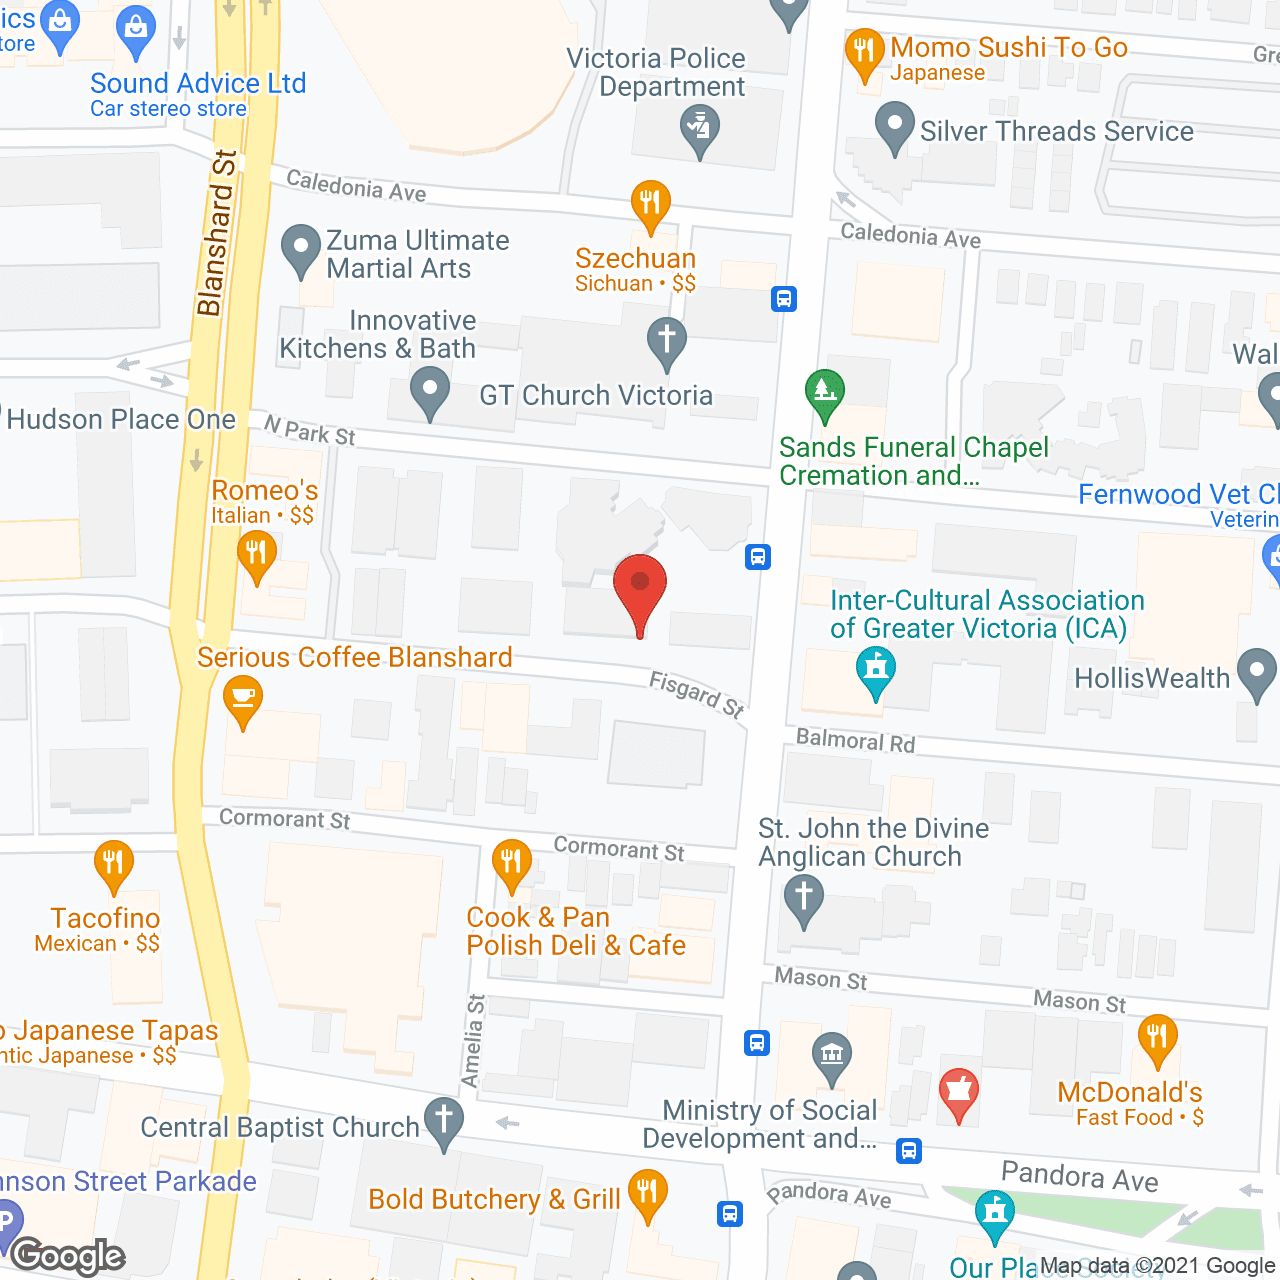 Fisgard House in google map